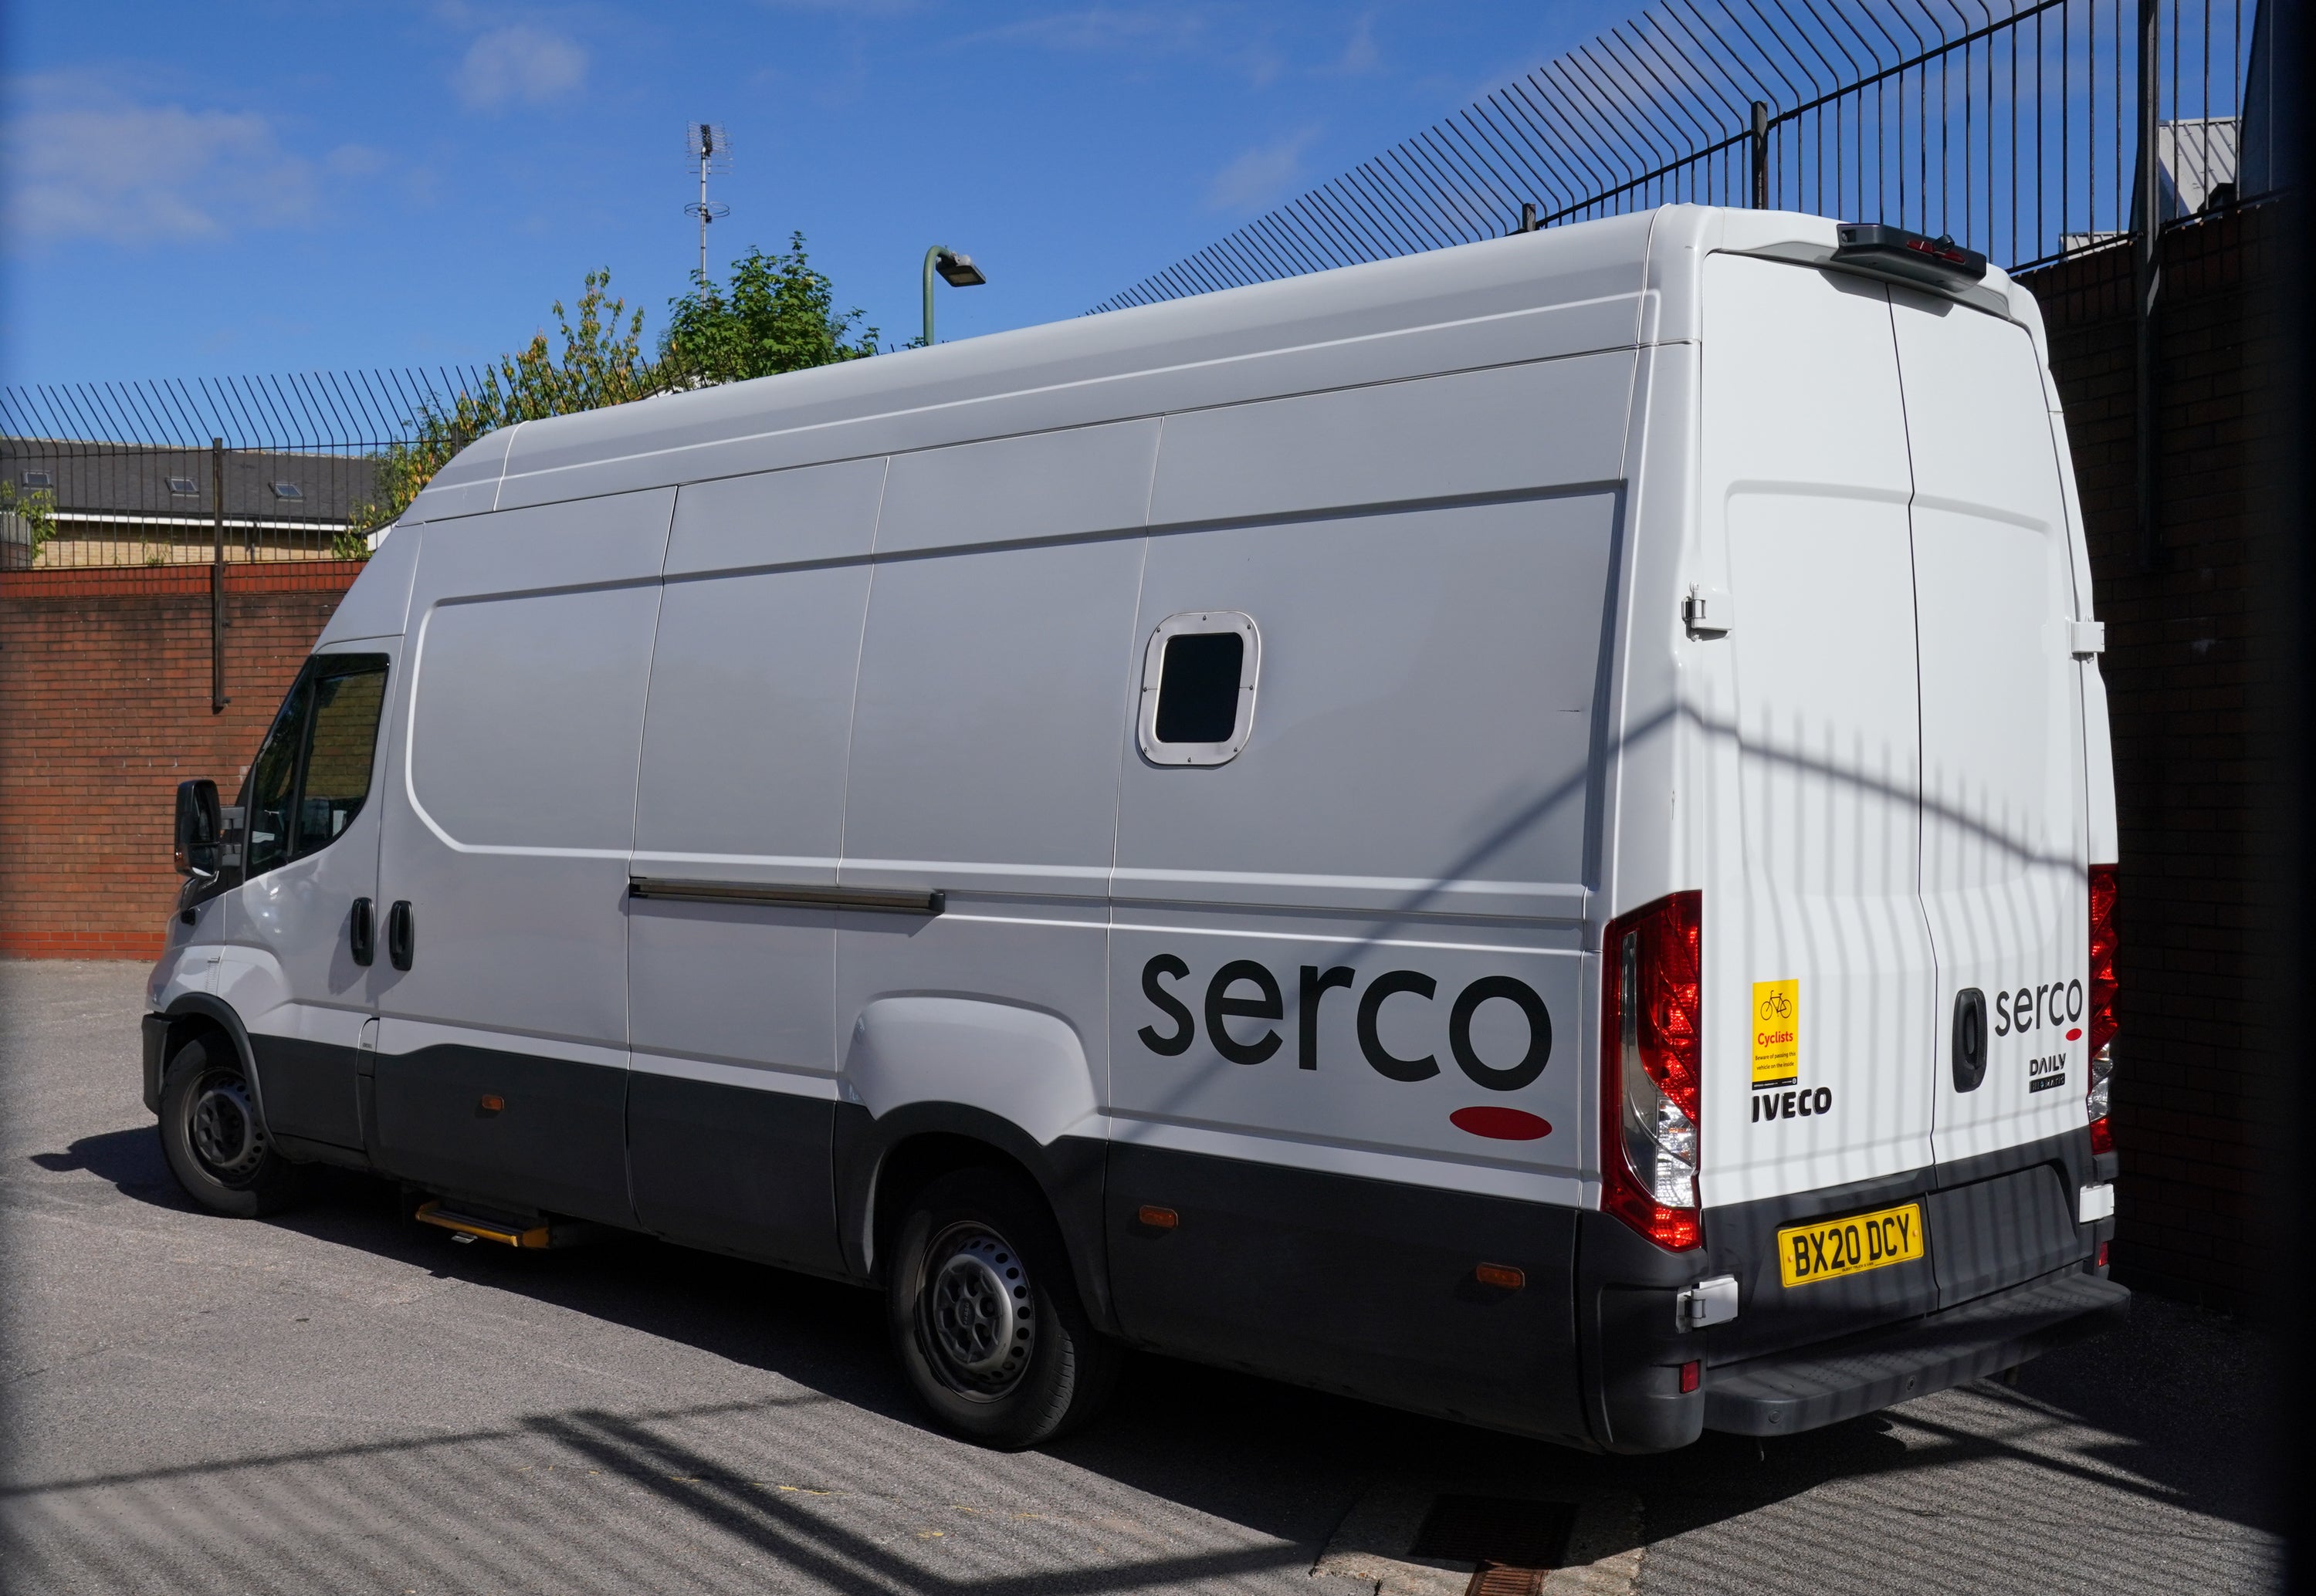 Rupert Soames has led outsourcing company Serco for nearly a decade (Jonathan Brady/PA)